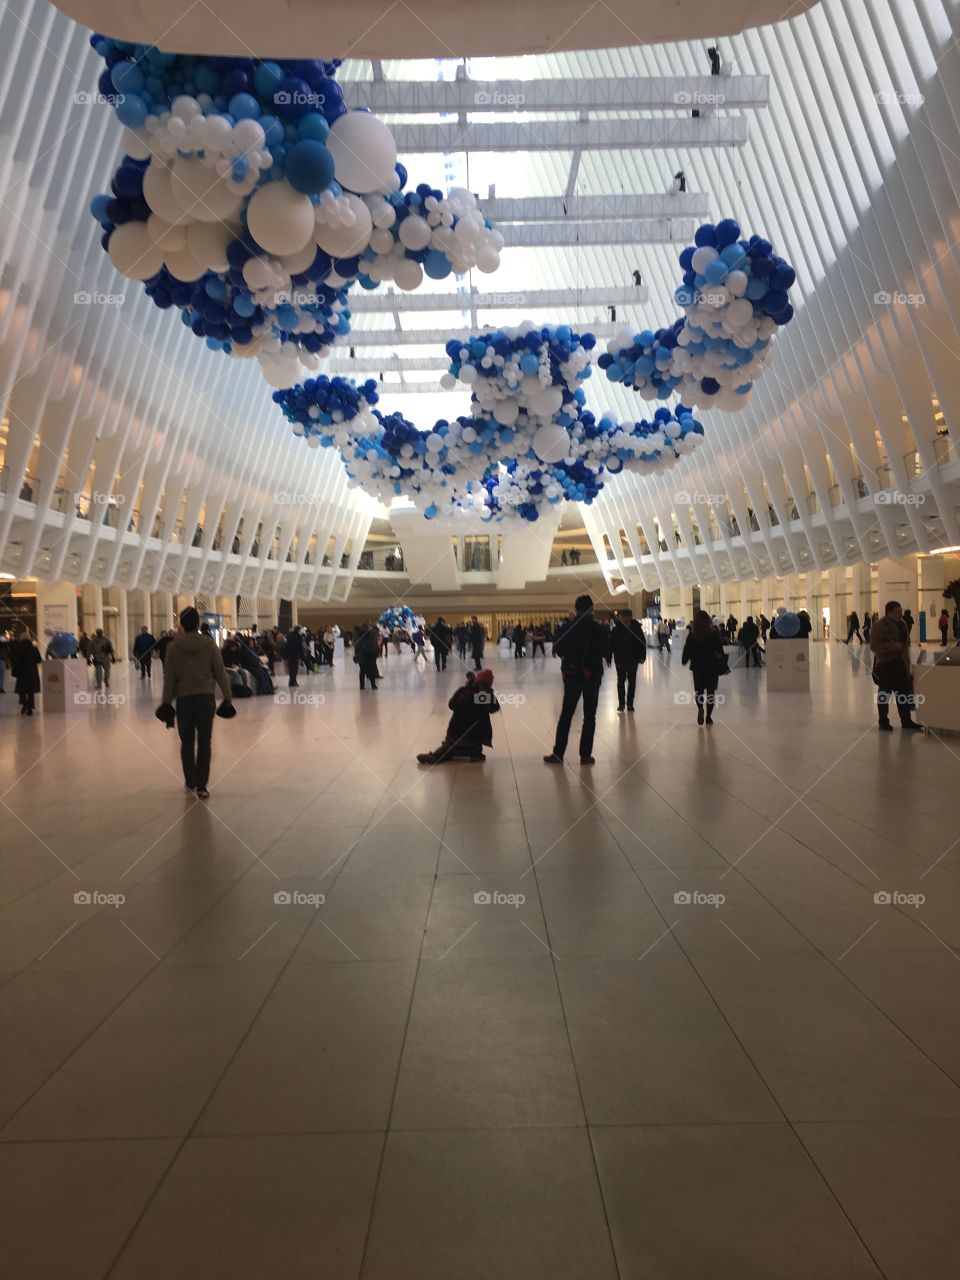 Balloon ceiling 